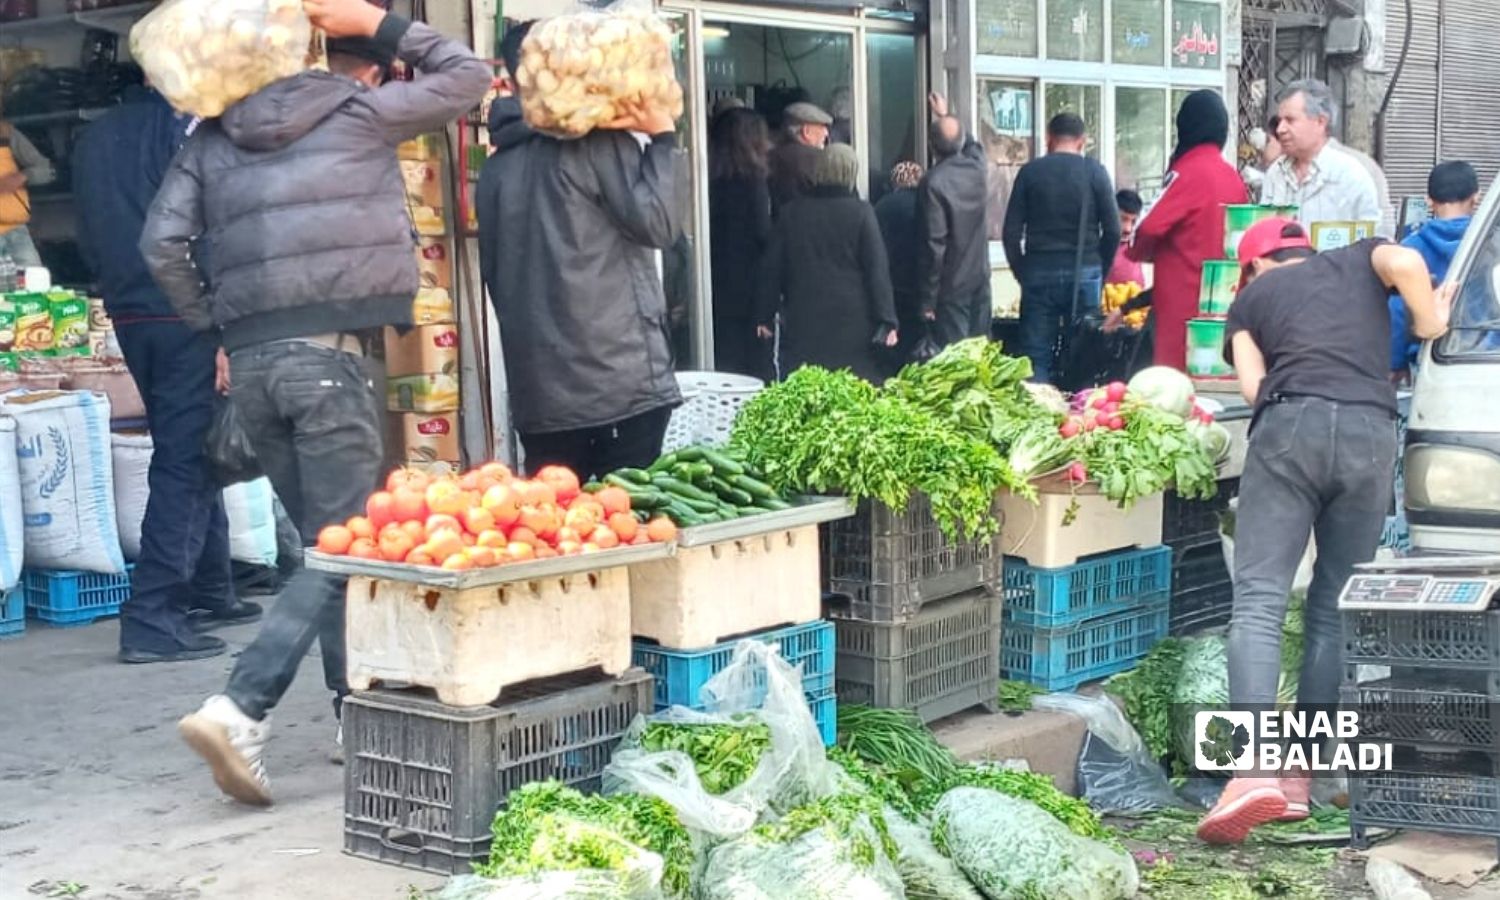 A vegetable seller in Ugarit street market located between al-Owaineh and Slaybeh neighborhoods in Latakia city - 2 April 2022 (Enab Baladi)
